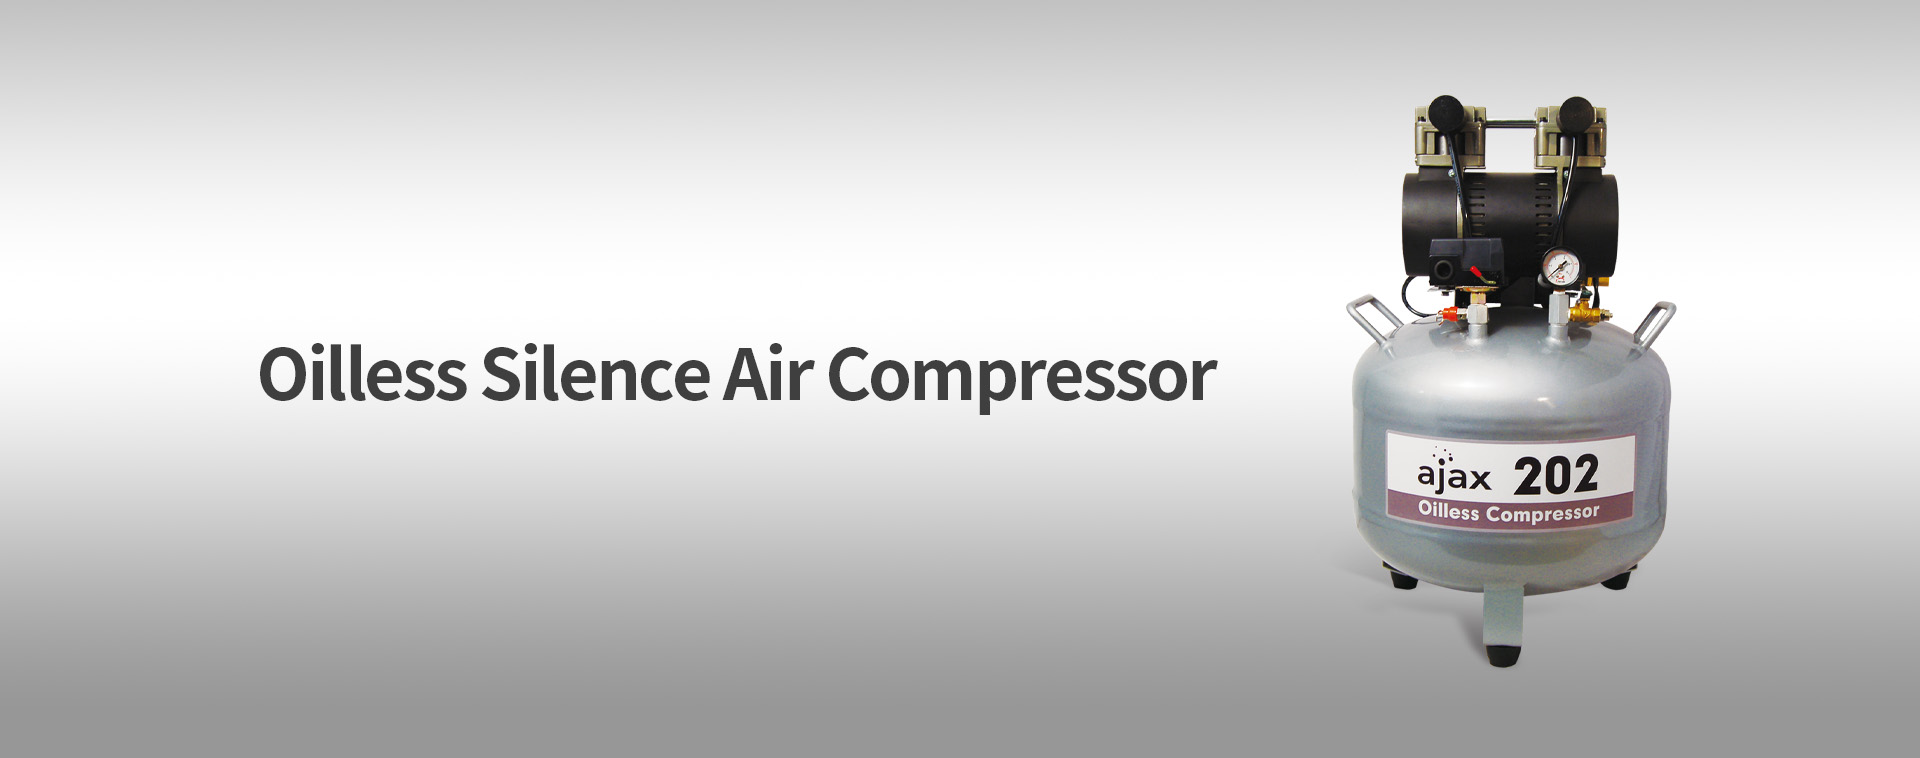 AJAX 202 Luftkompressor